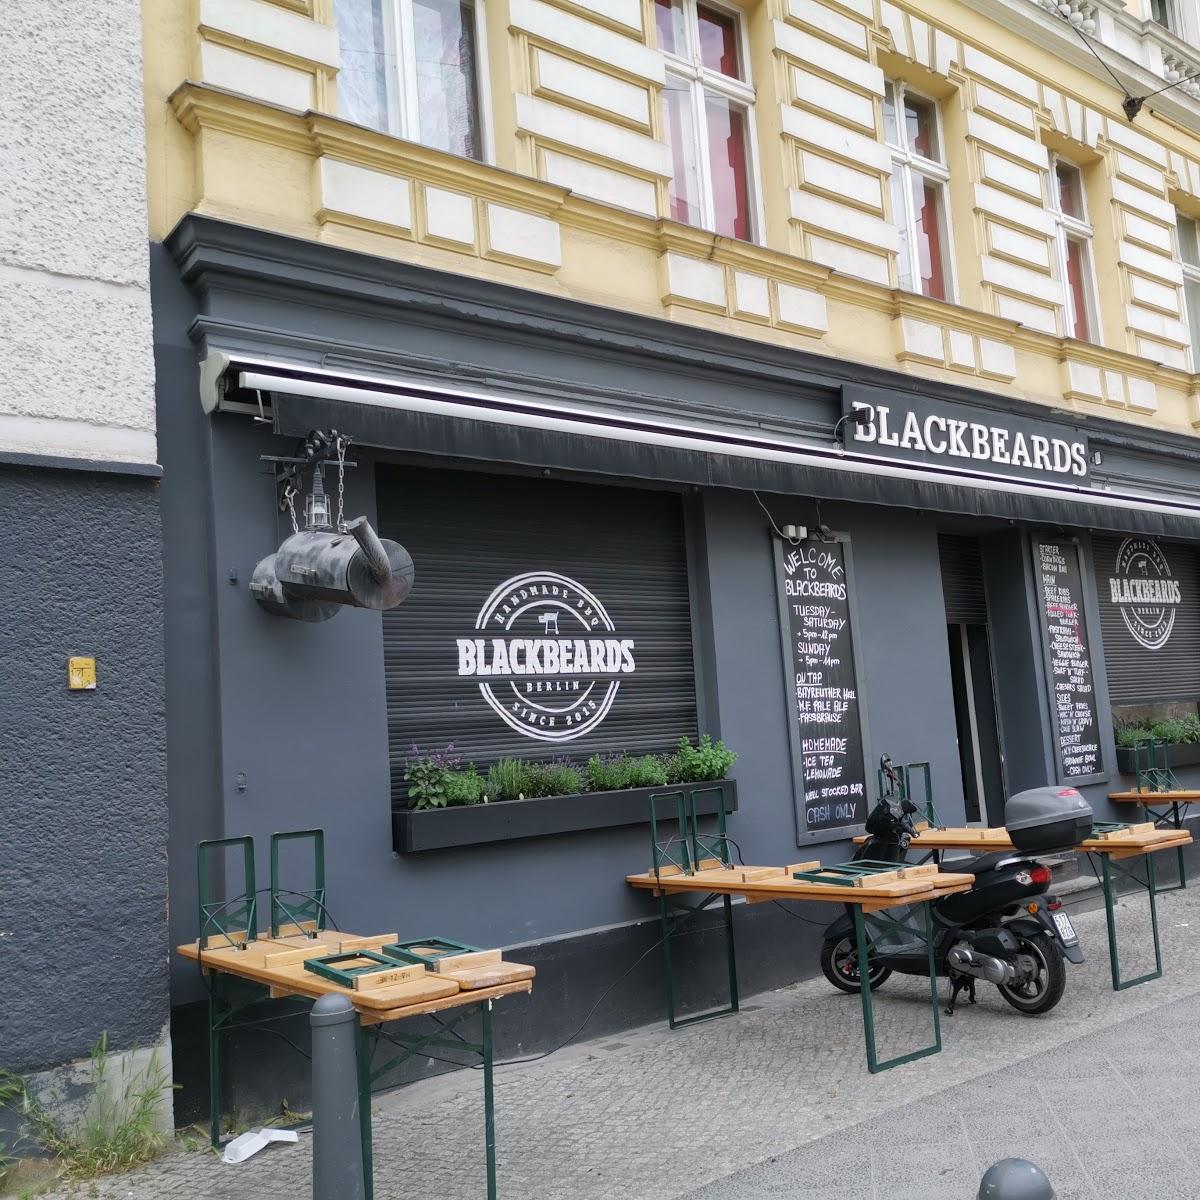 Restaurant "BLACKBEARDS BBQ JOINT" in Berlin